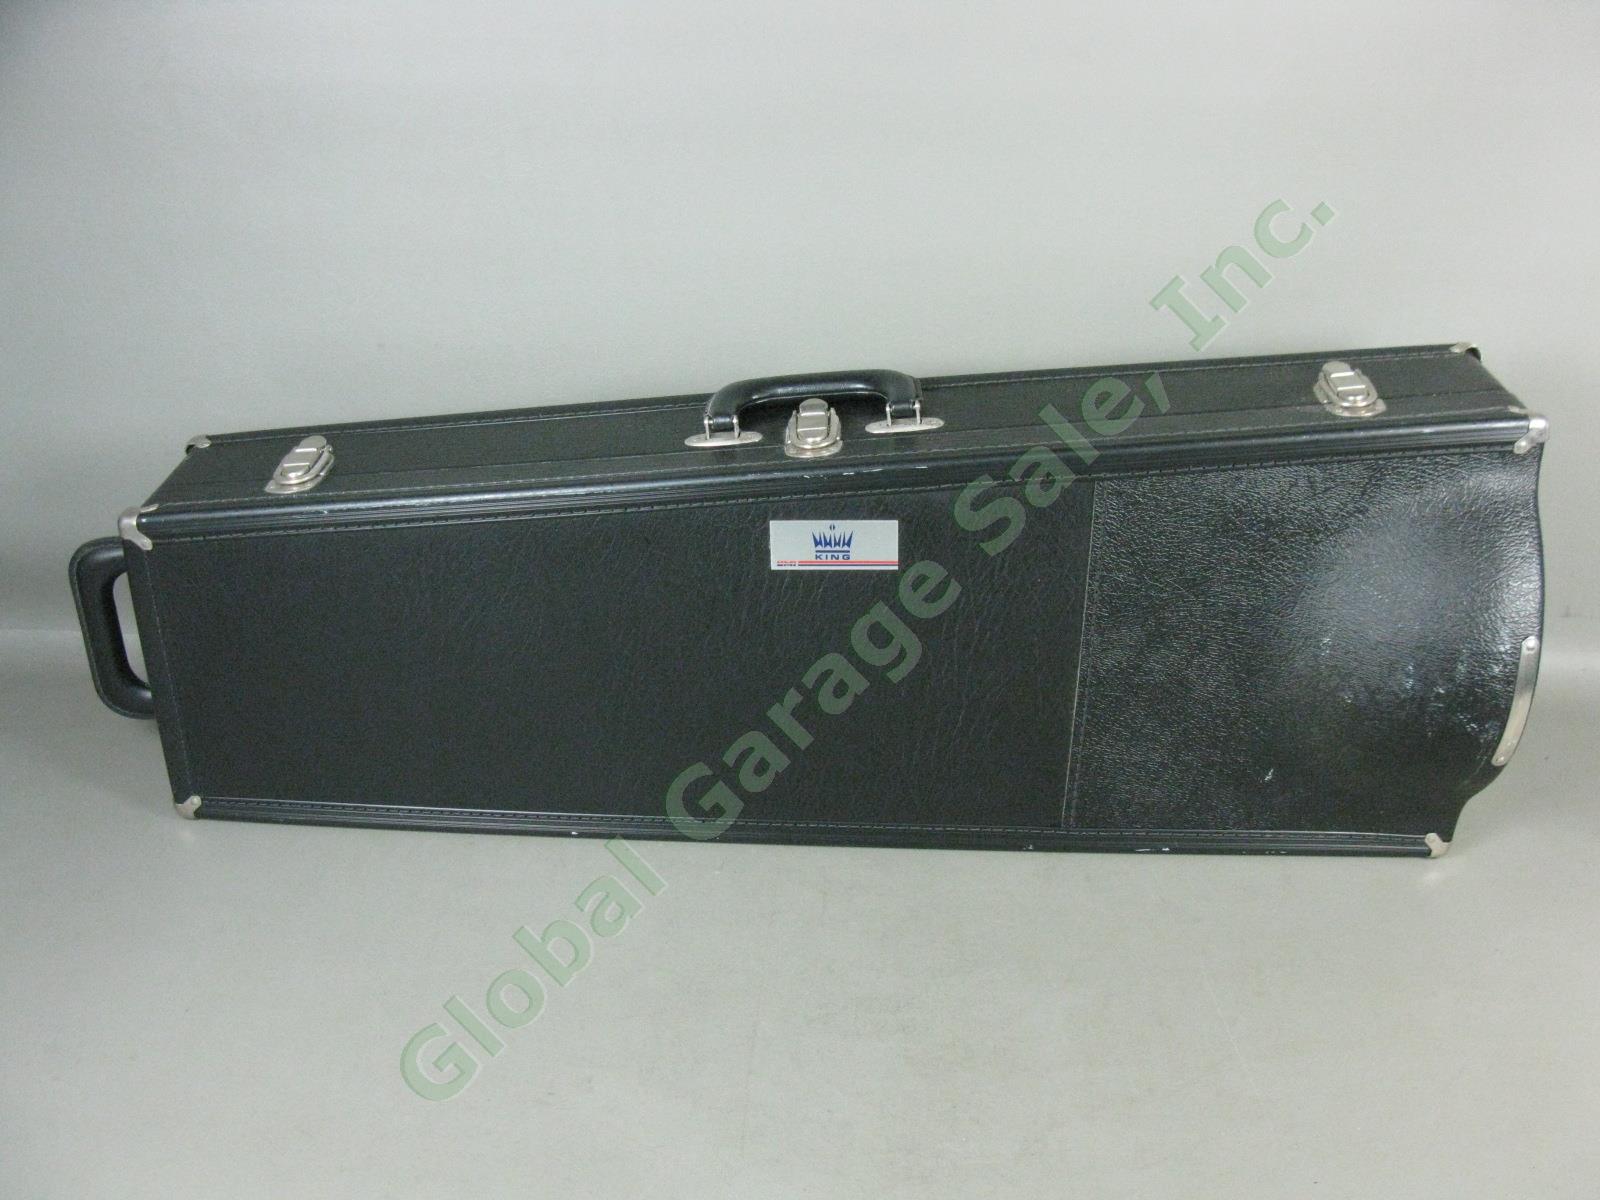 King 2103 3B Slide Trombone 7C Mouthpiece Original Owner/Case VG Condition NR! 17